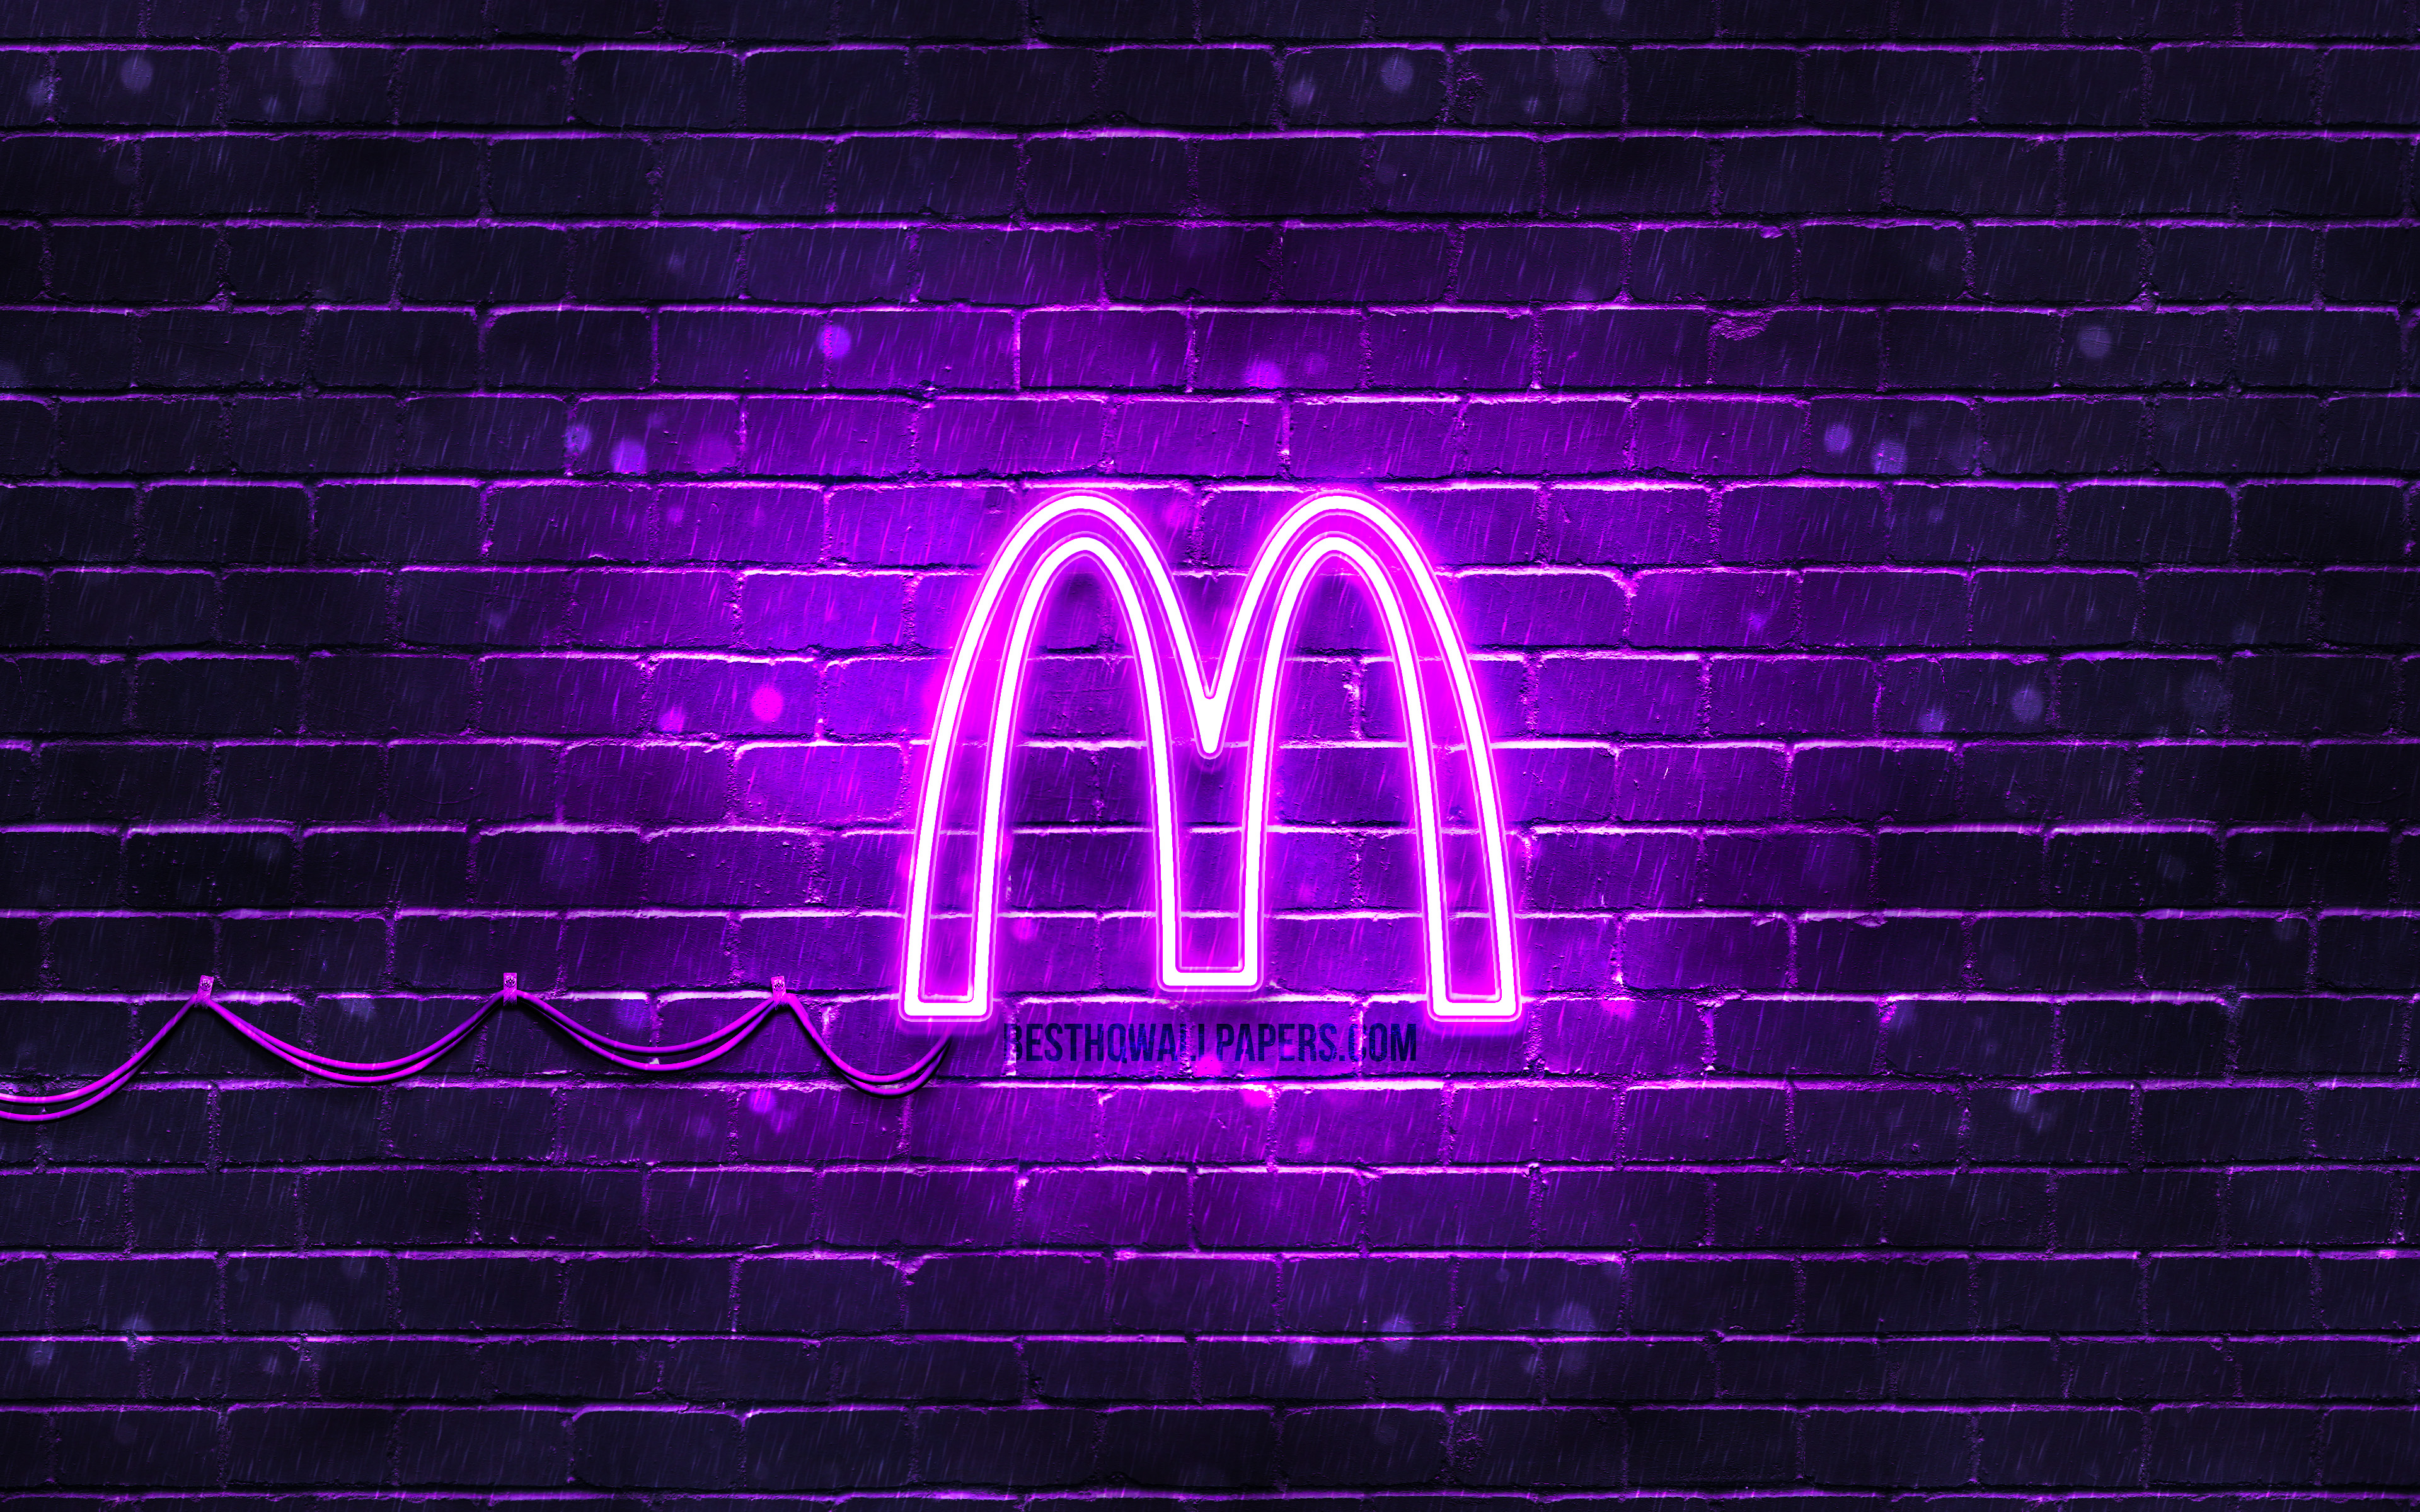 Download wallpaper McDonalds violet logo, 4k, violet brickwall, McDonalds logo, brands, McDonalds neon logo, McDonalds for desktop with resolution 3840x2400. High Quality HD picture wallpaper